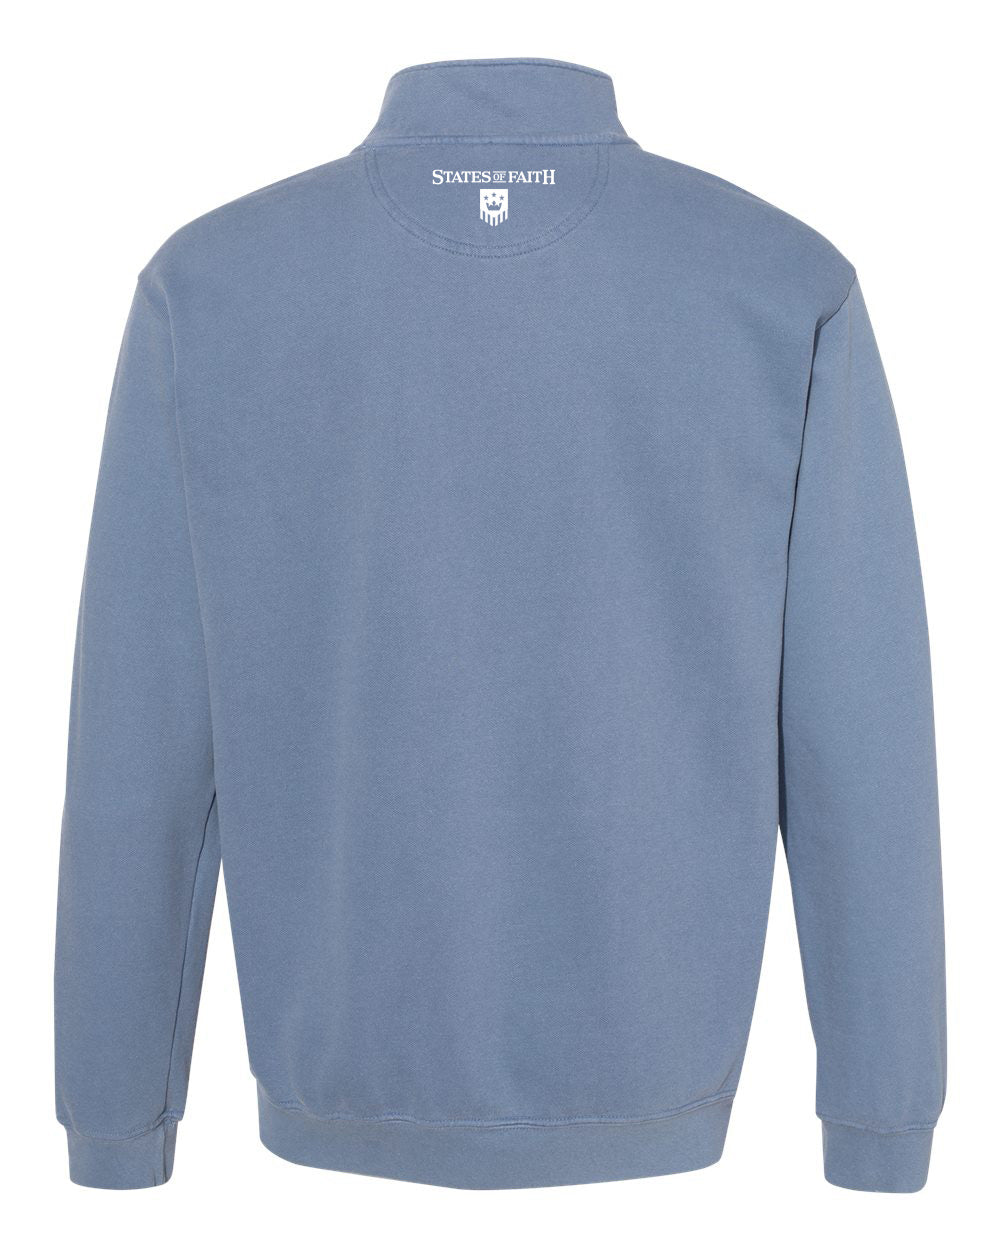 Idaho State Catholic Rosary custom sweatshirt, drop hoodie, comfort colors quarter zip, pullover, Gift, State Pride, blue jean-back